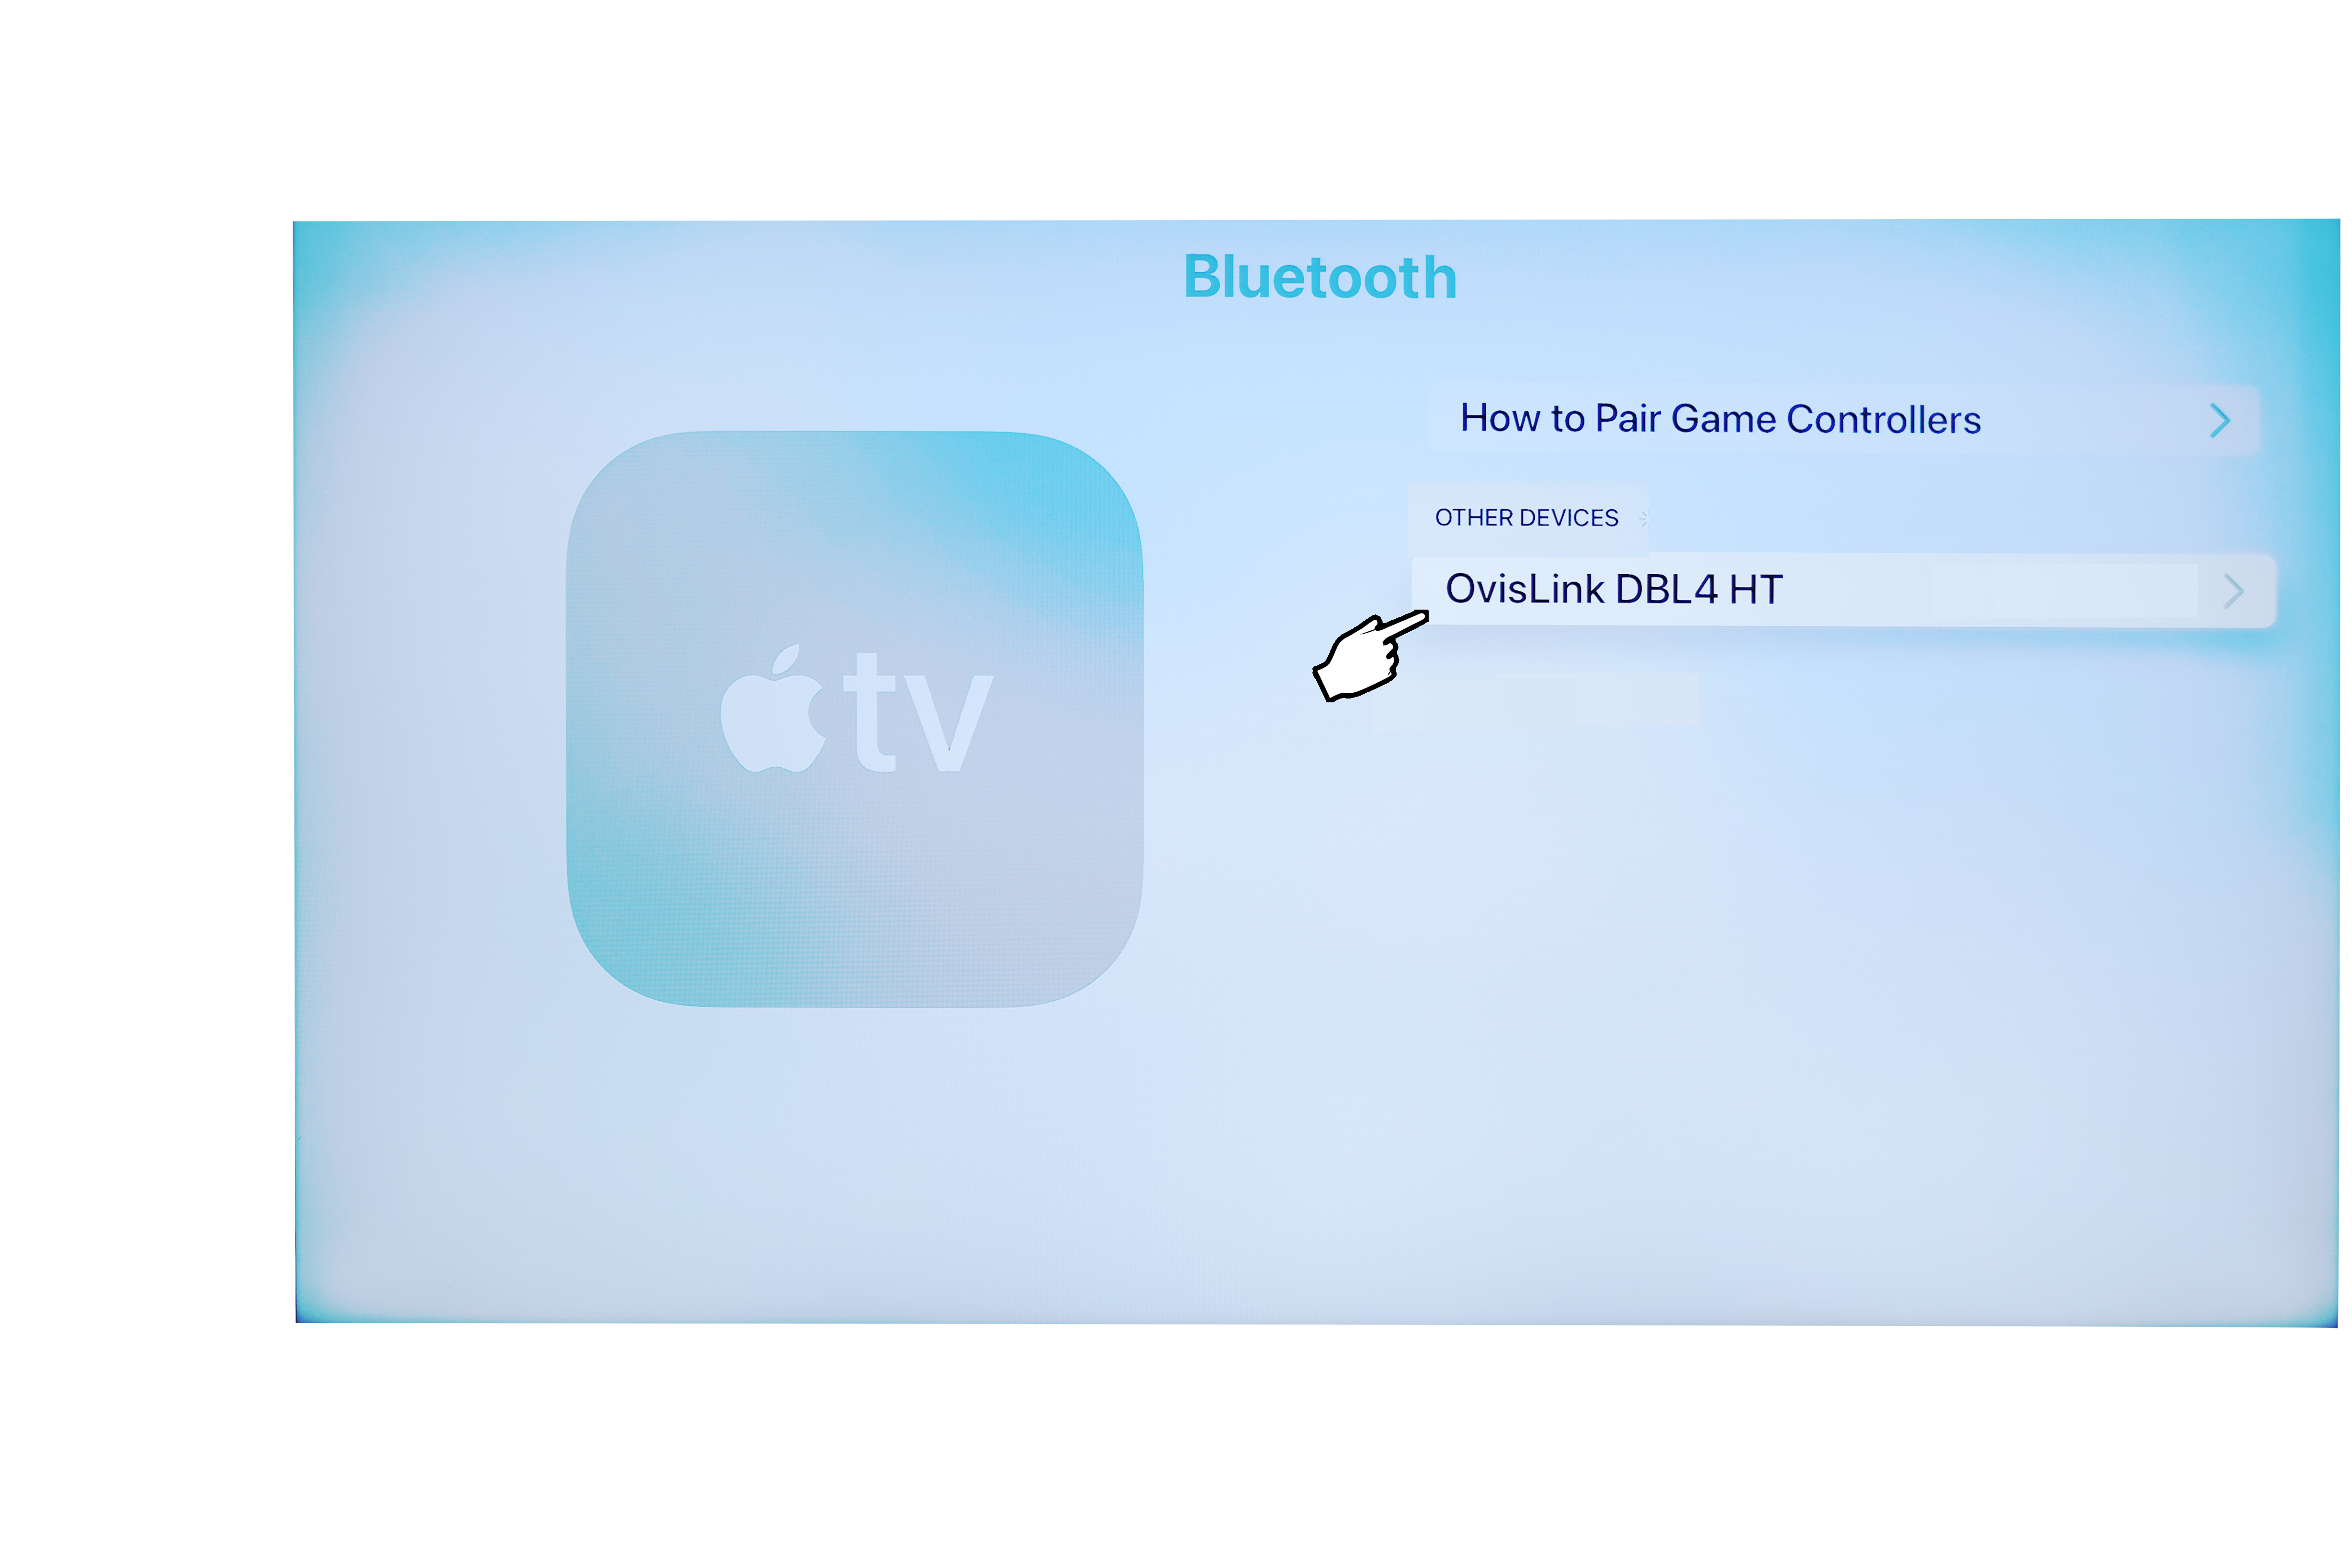 Apple TV found OvisLink Bluetooth headset